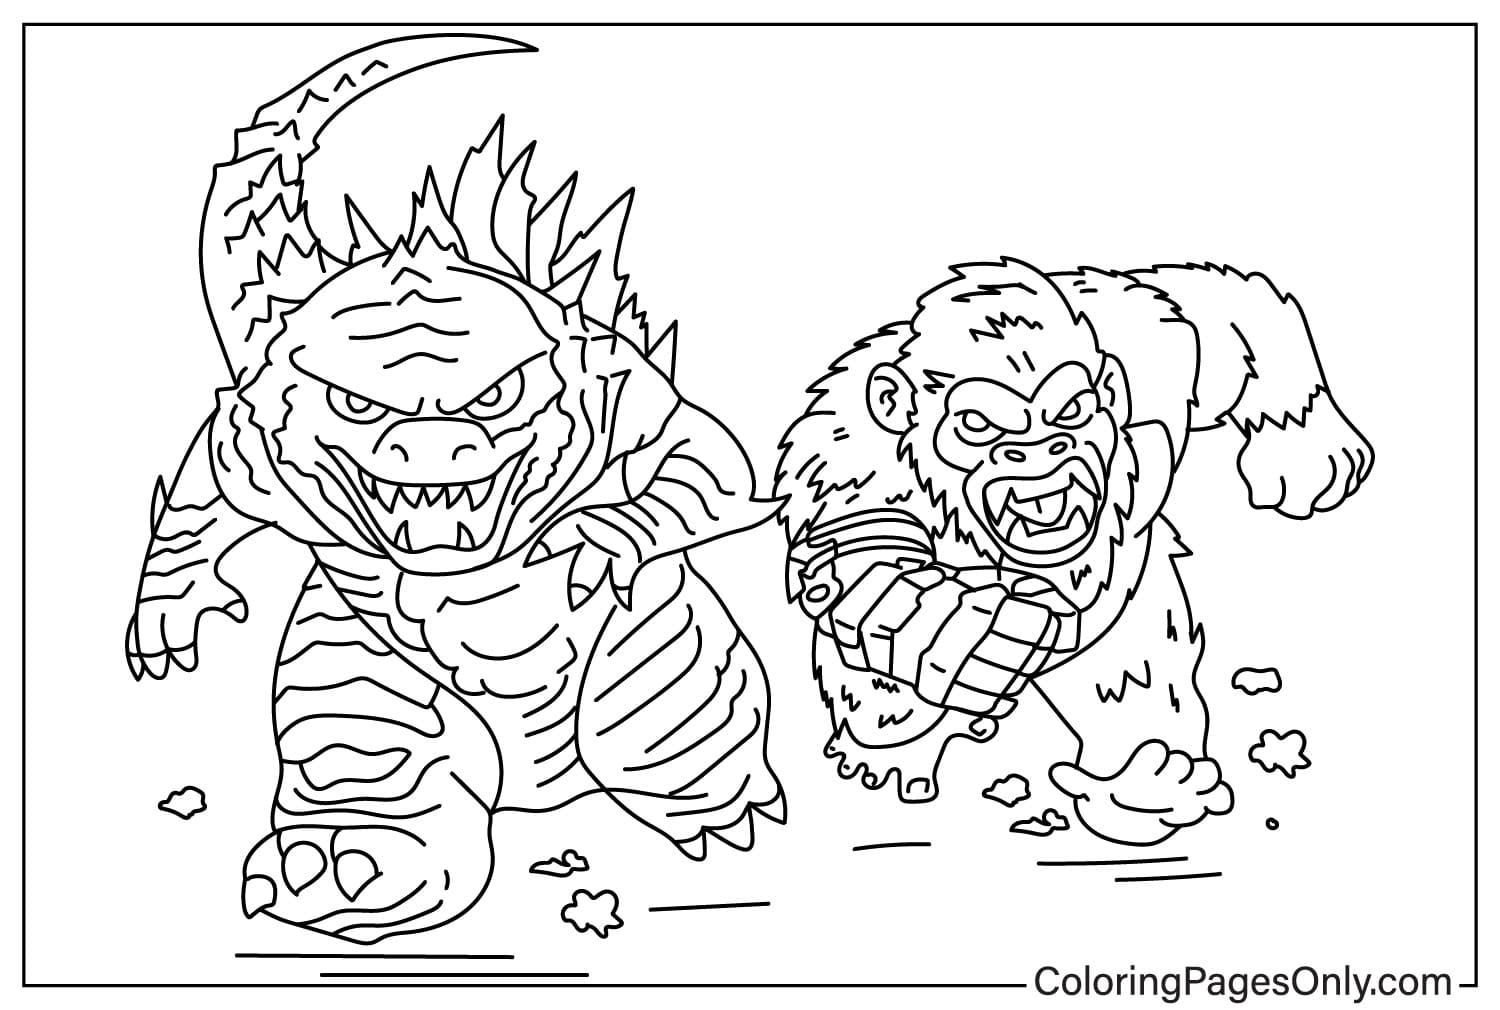 Godzilla x Kong- The New Empire Coloring Page for Kids from Godzilla x Kong: The New Empire